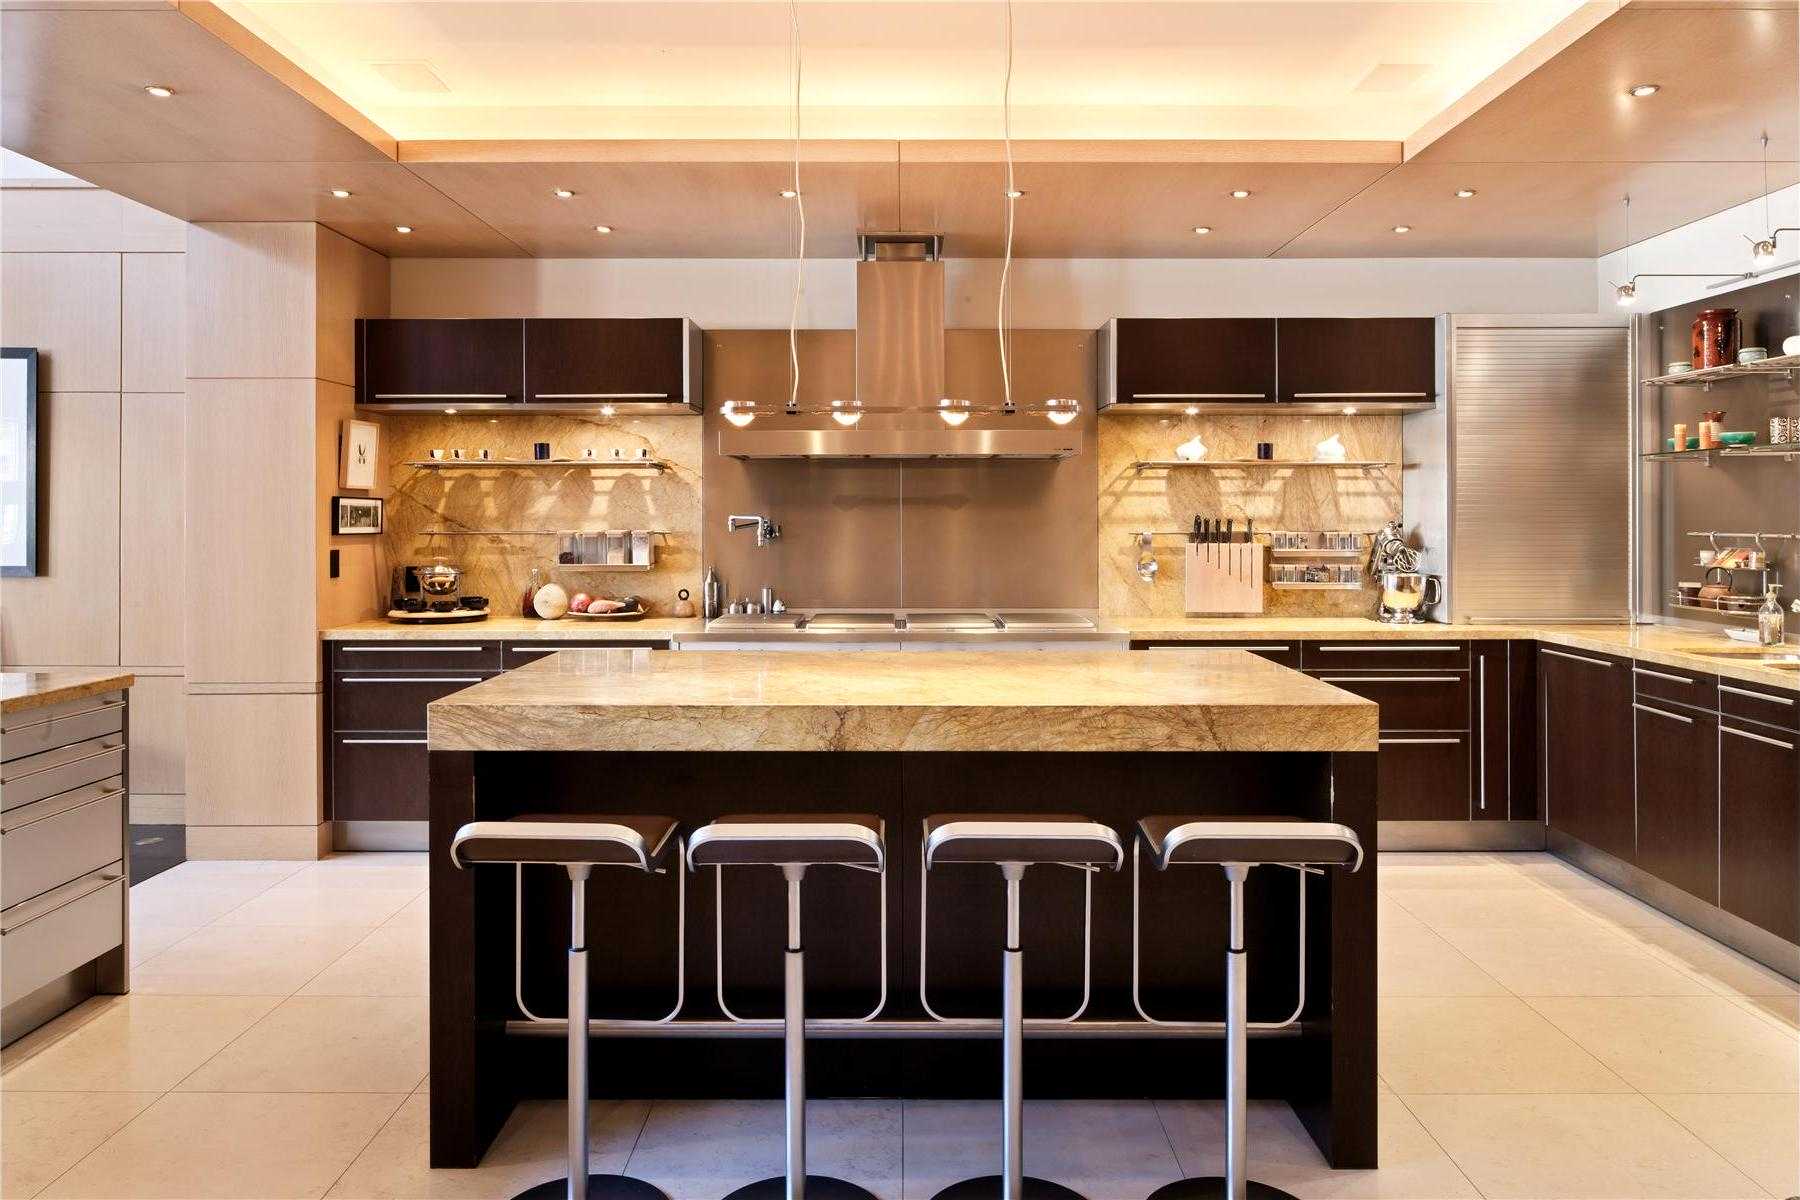 interior design for kitchen is called